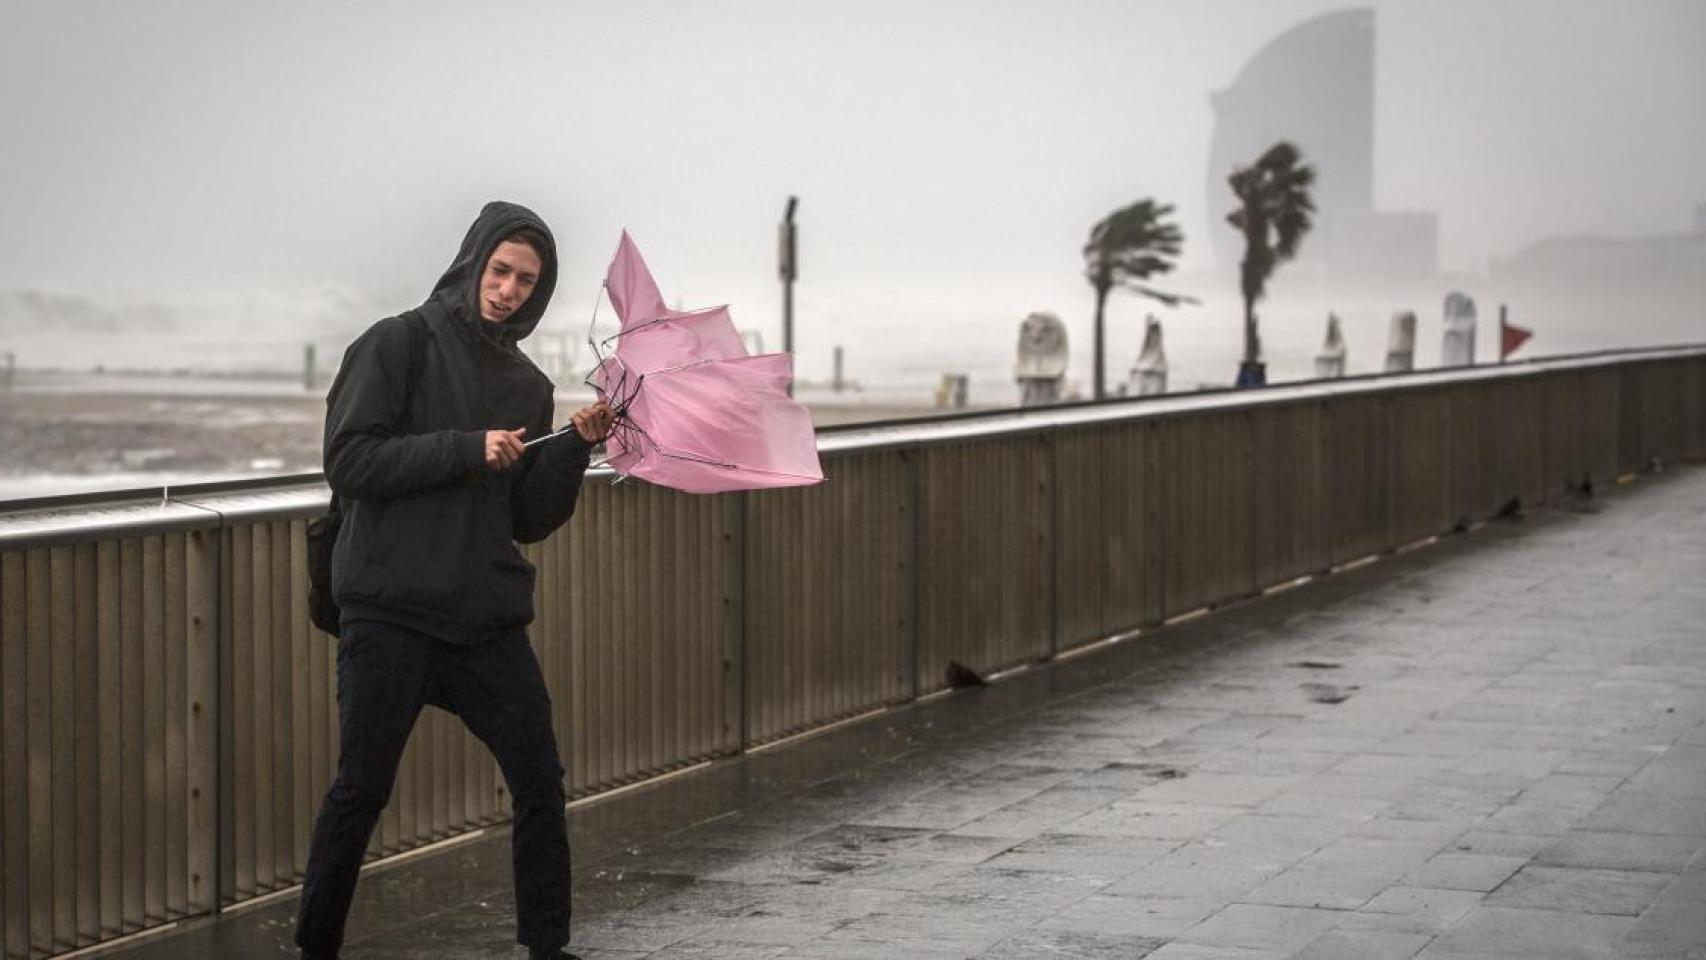 Un joven sujeta un paraguas bajo una fuerte lluvia